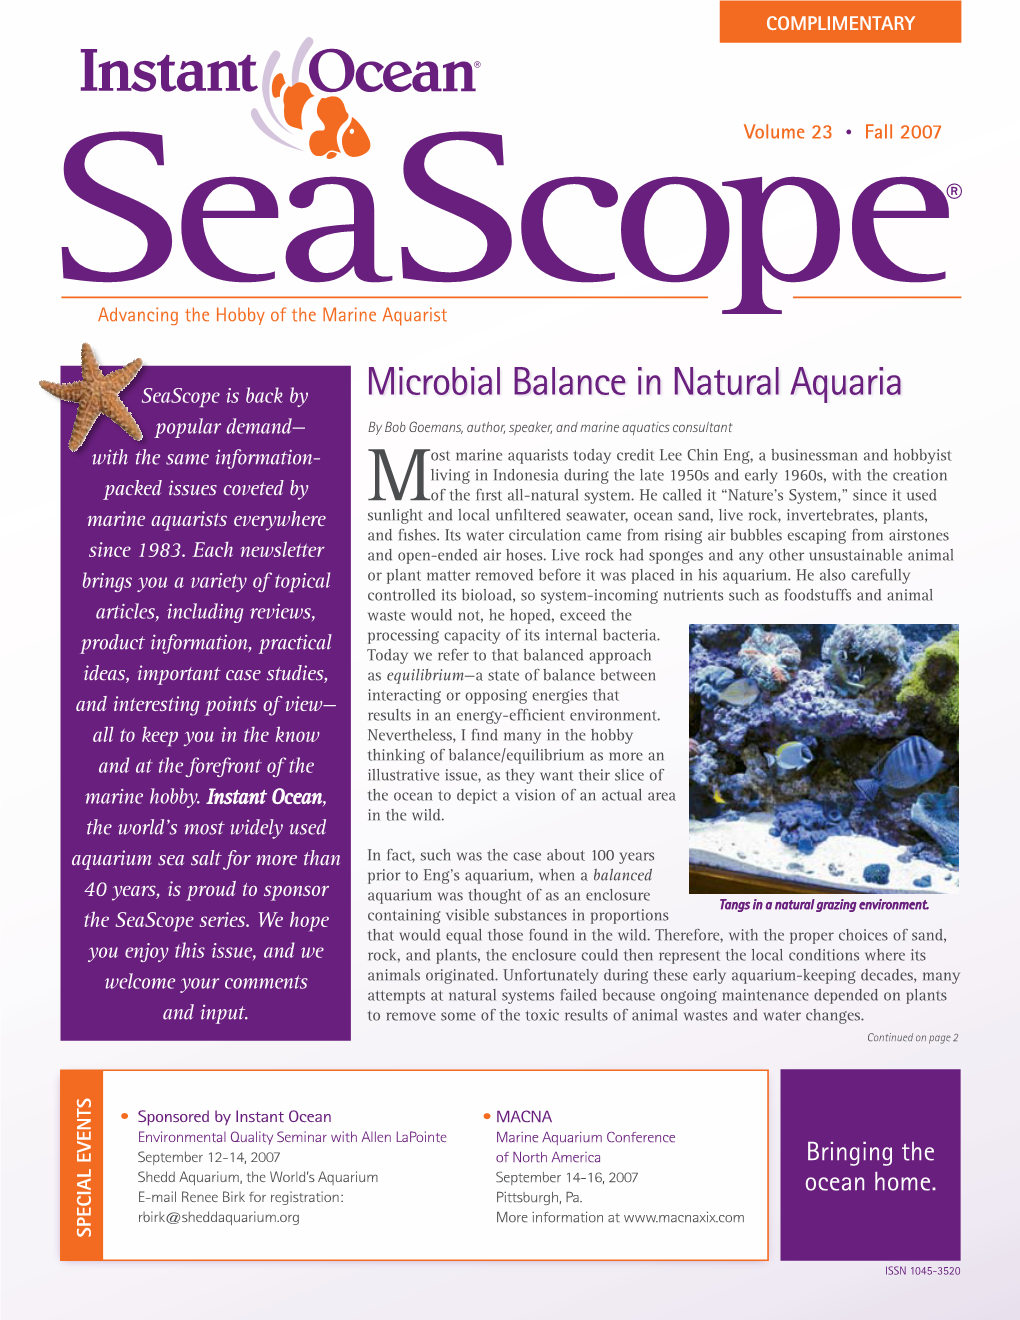 Microbial Balance in Natural Aquaria